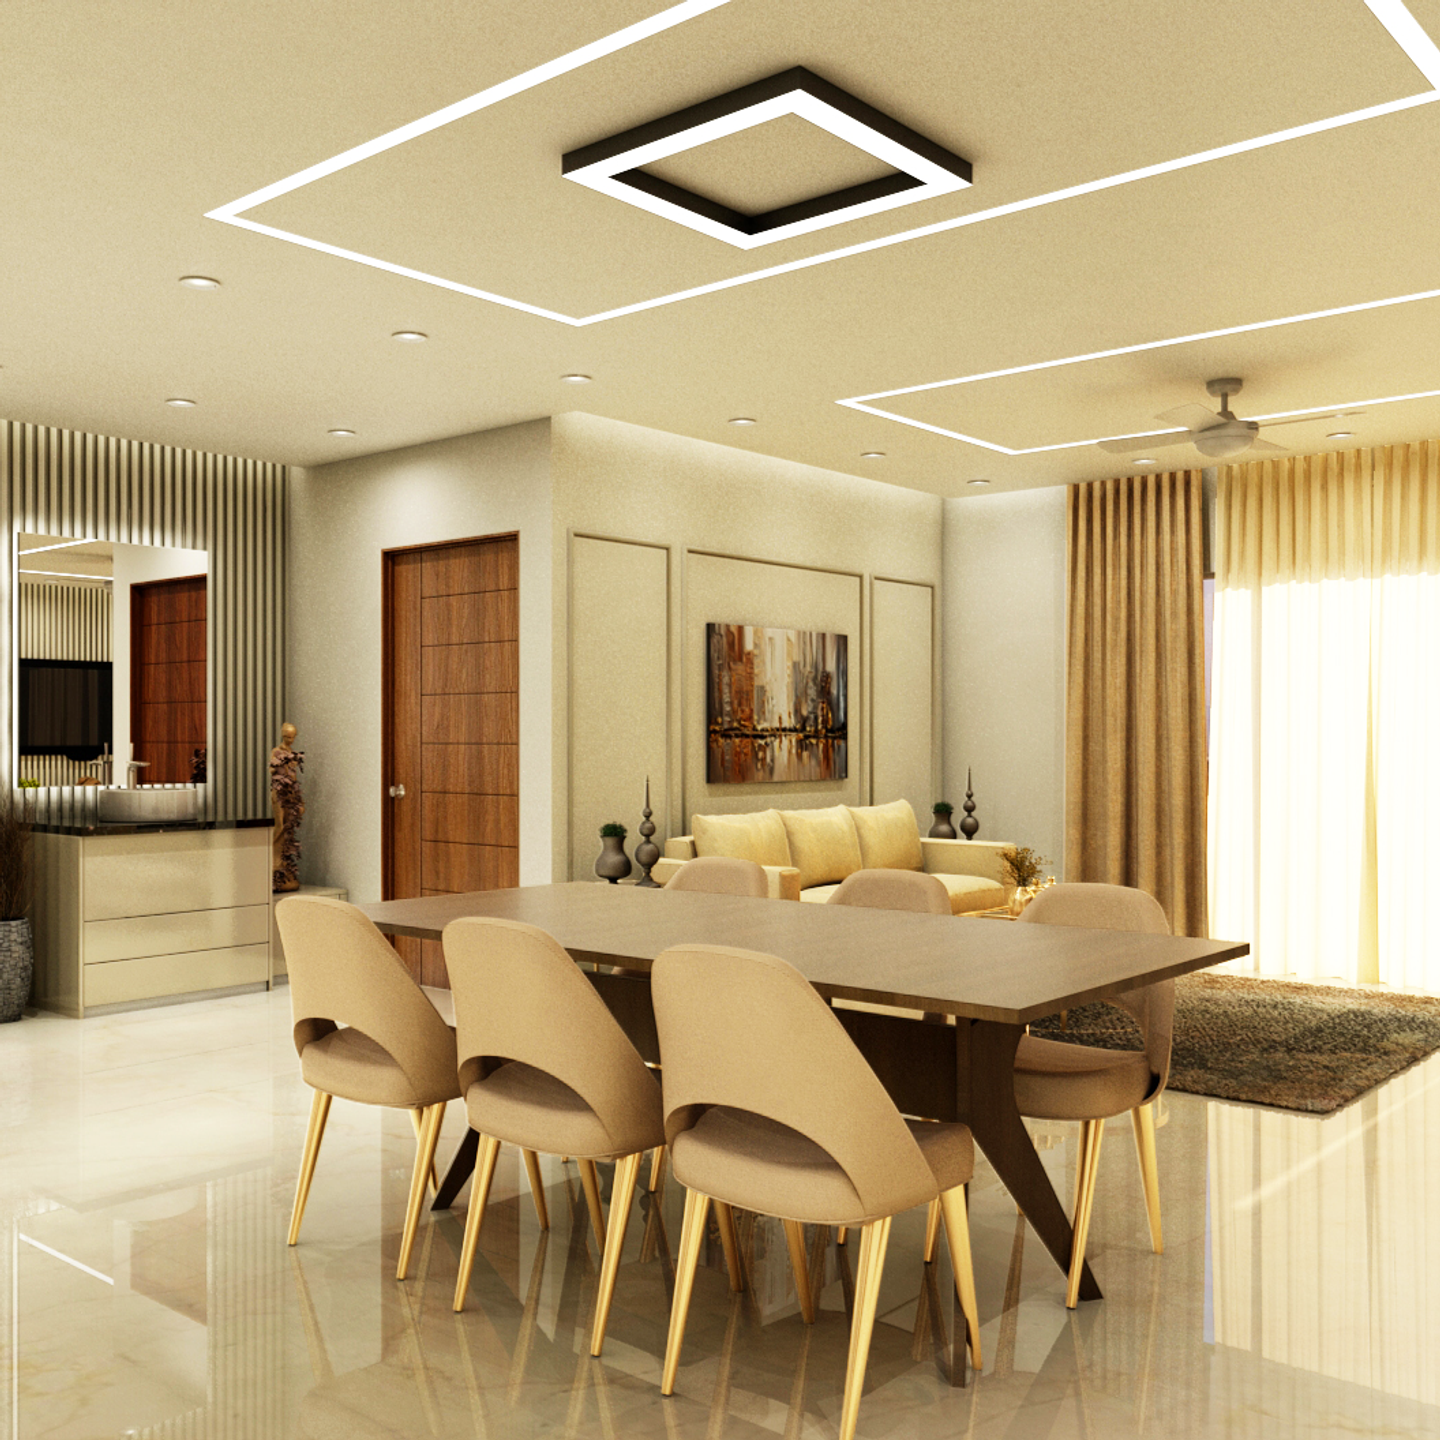 Simple and Spacious Dining Room Interior Design Ideas - Livspace